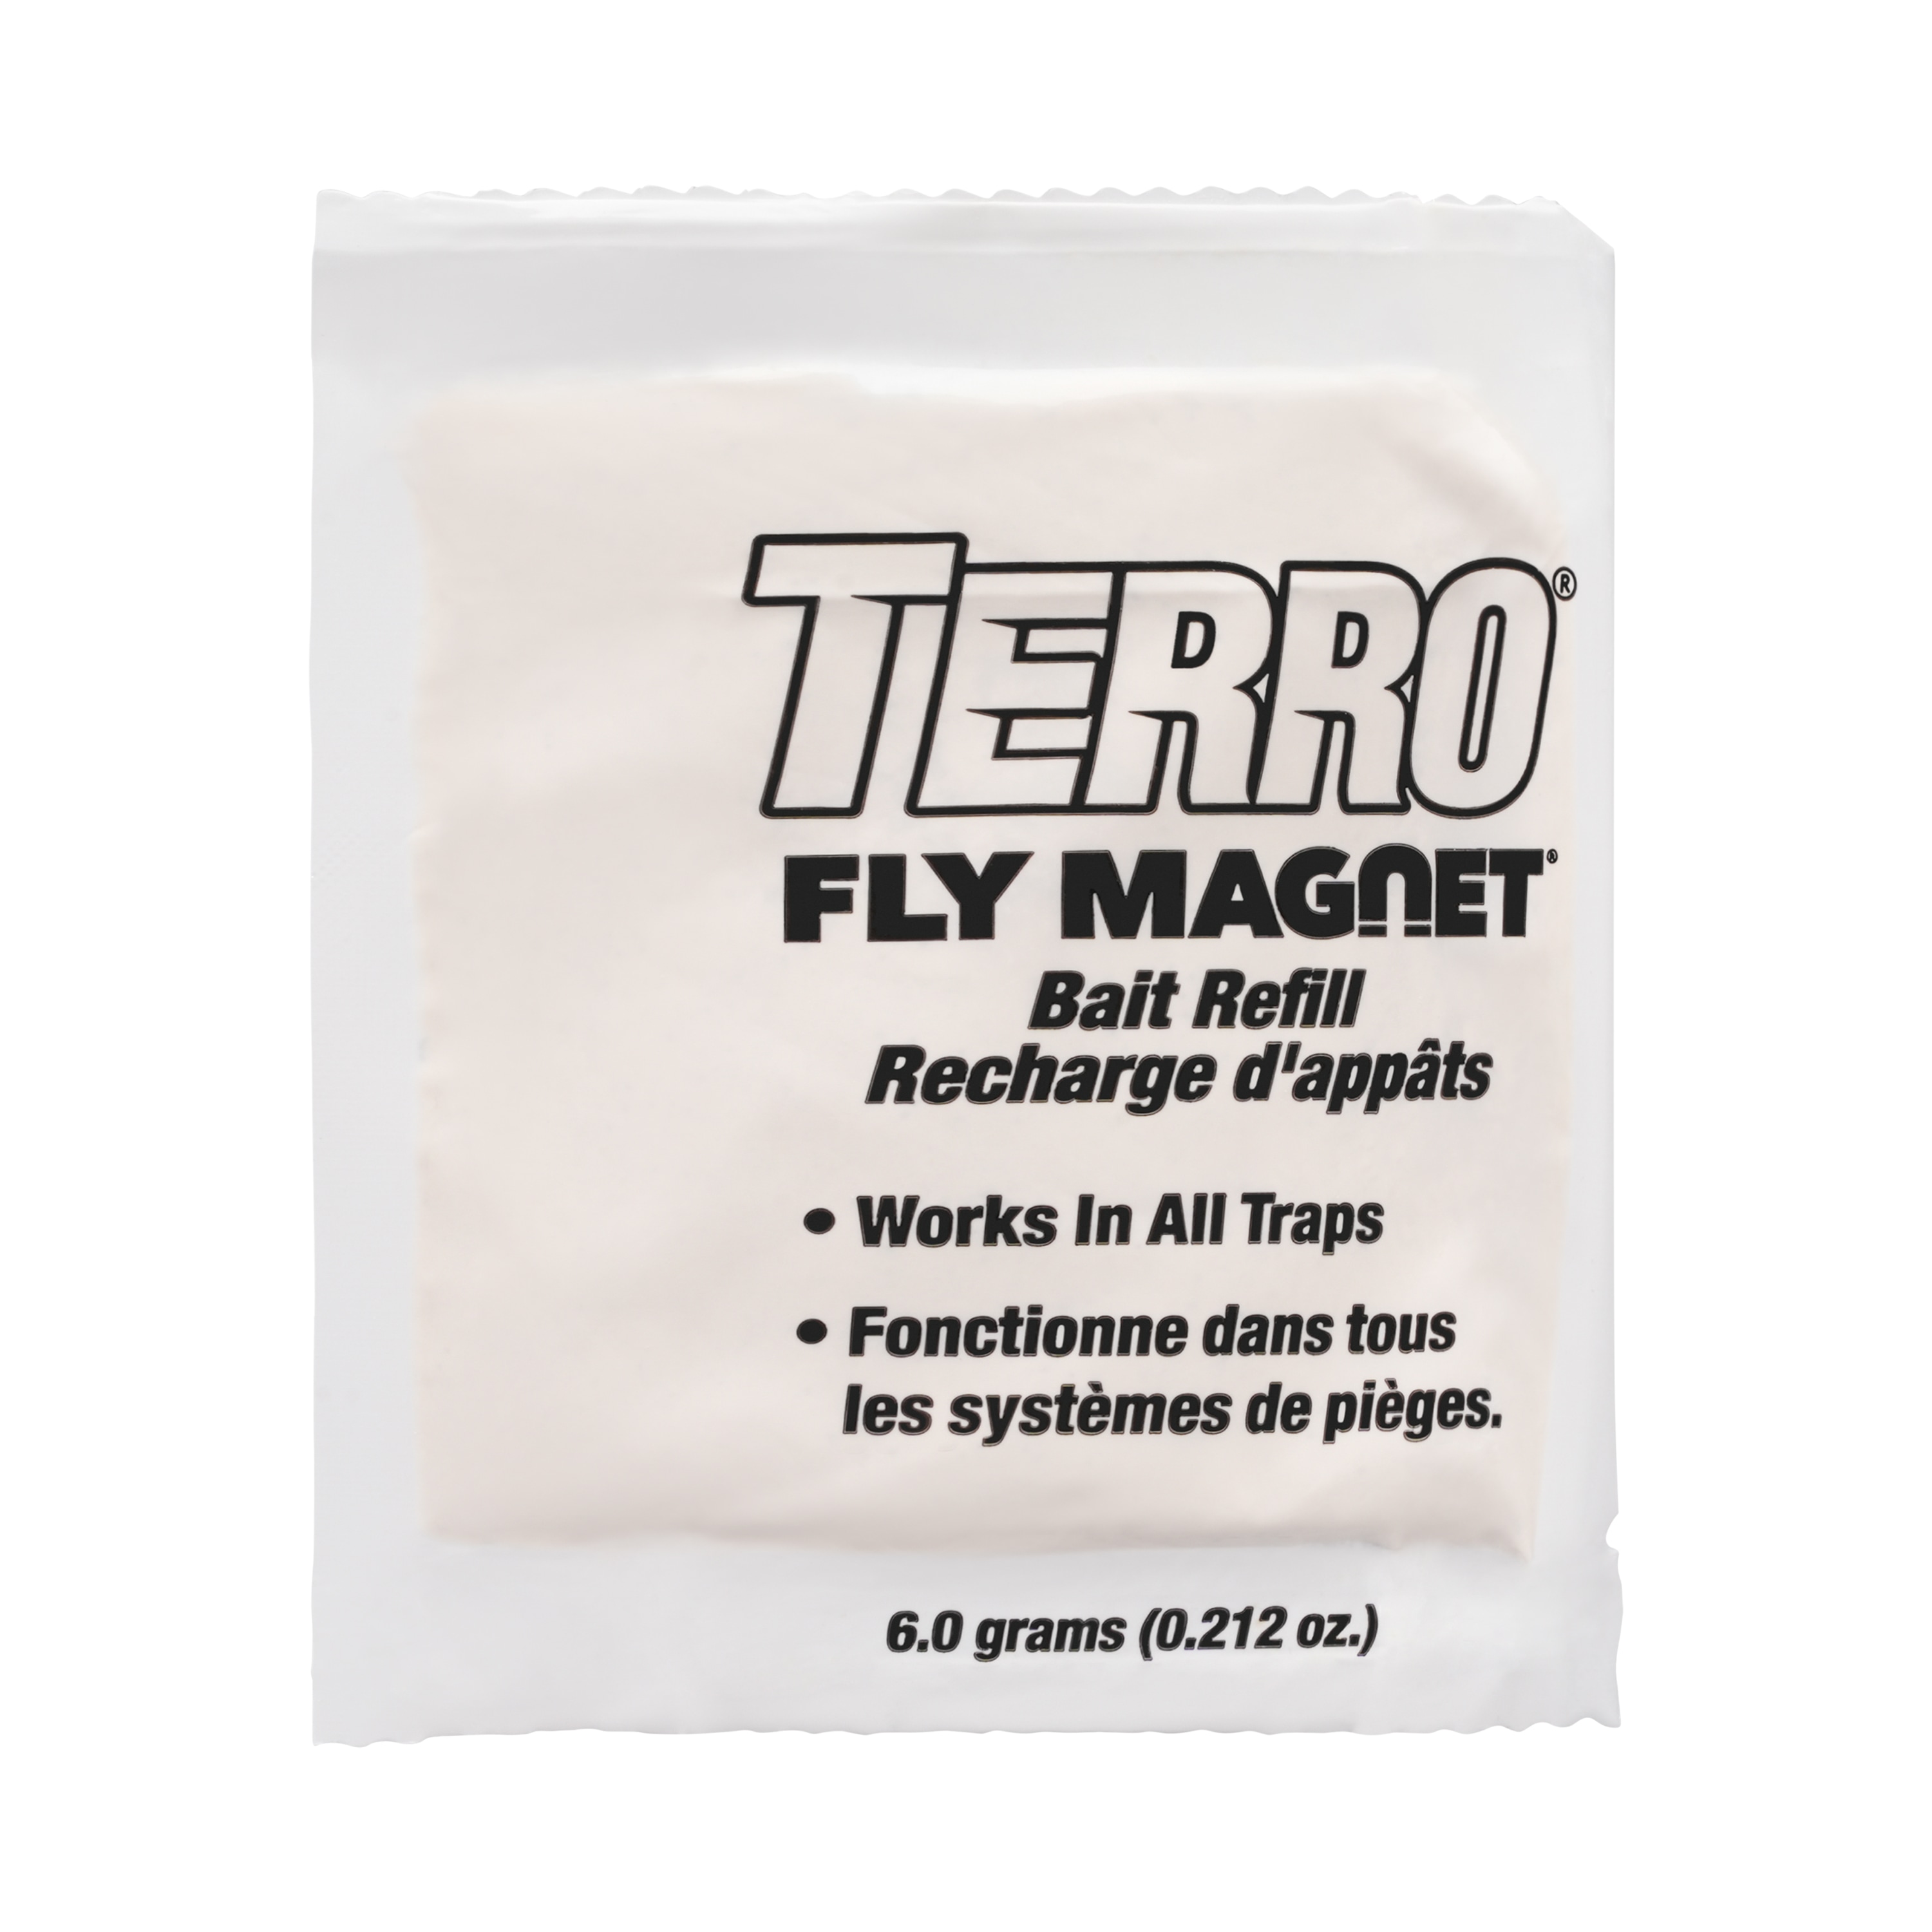 Refill Bait - Terro Wasp & Fly Trap - Grow Organic